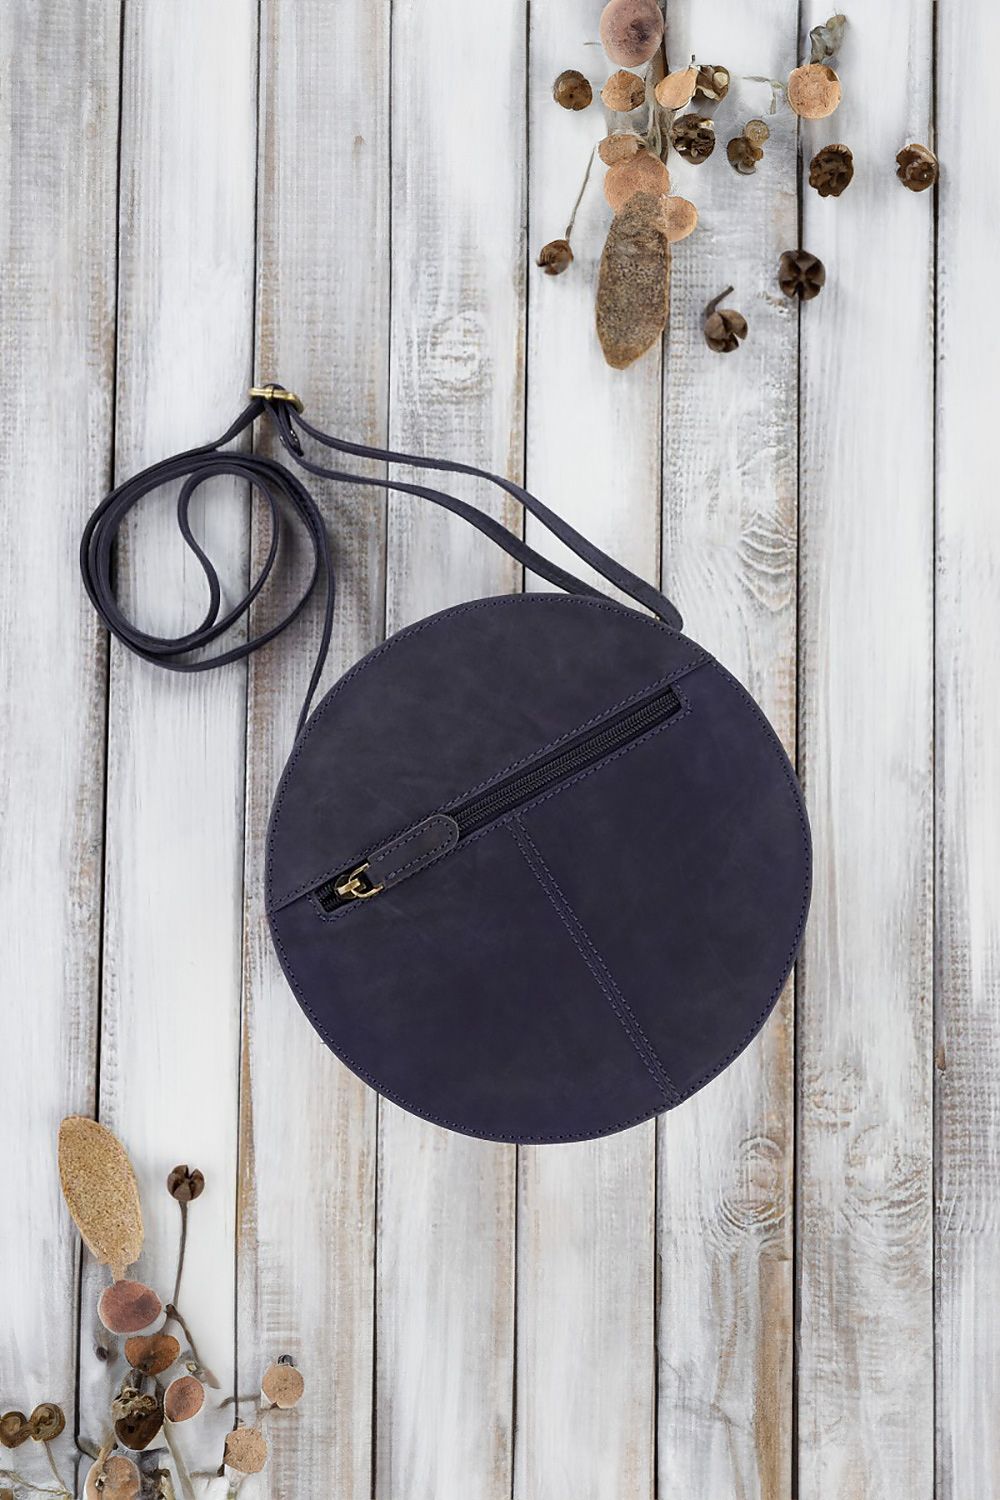 Galanter Aged Natural Leather Handbag: Vintage Style Meets Functional Elegance